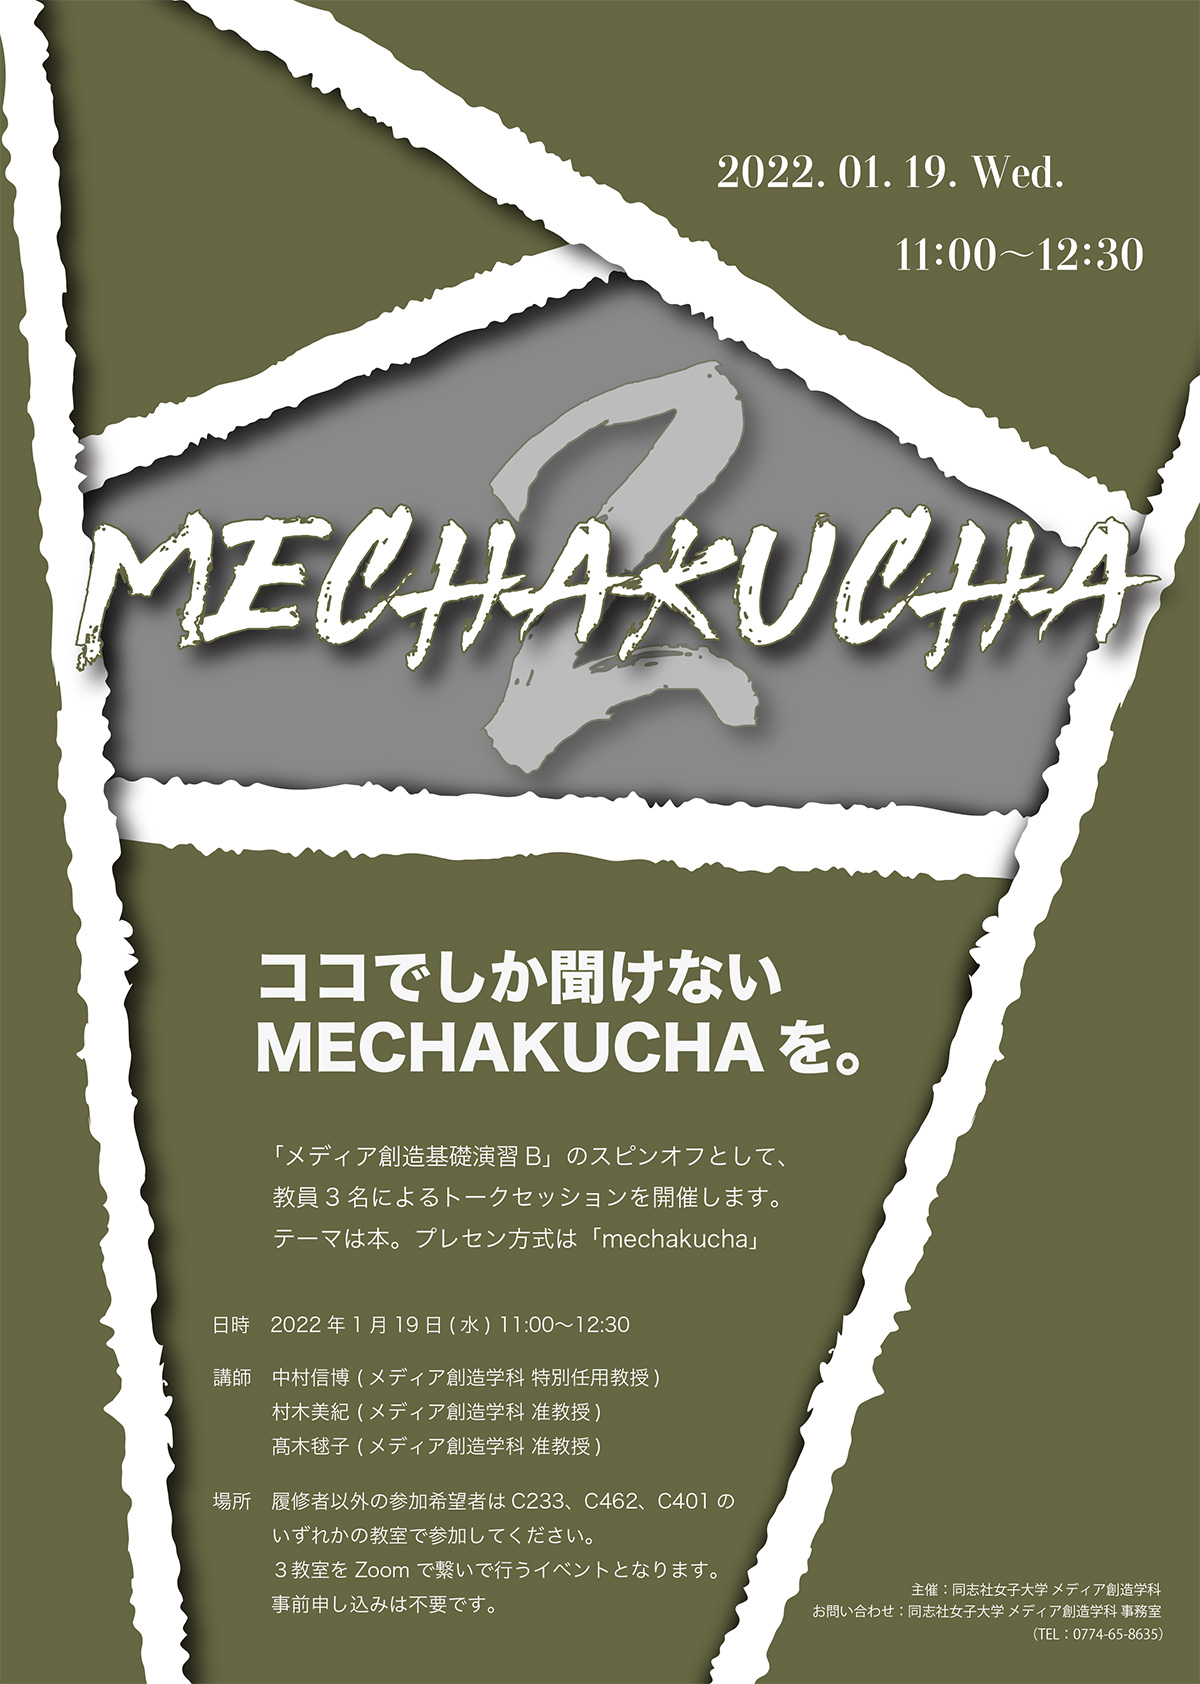 MECHAKUCHA2 - 教員3名によるトークセッション